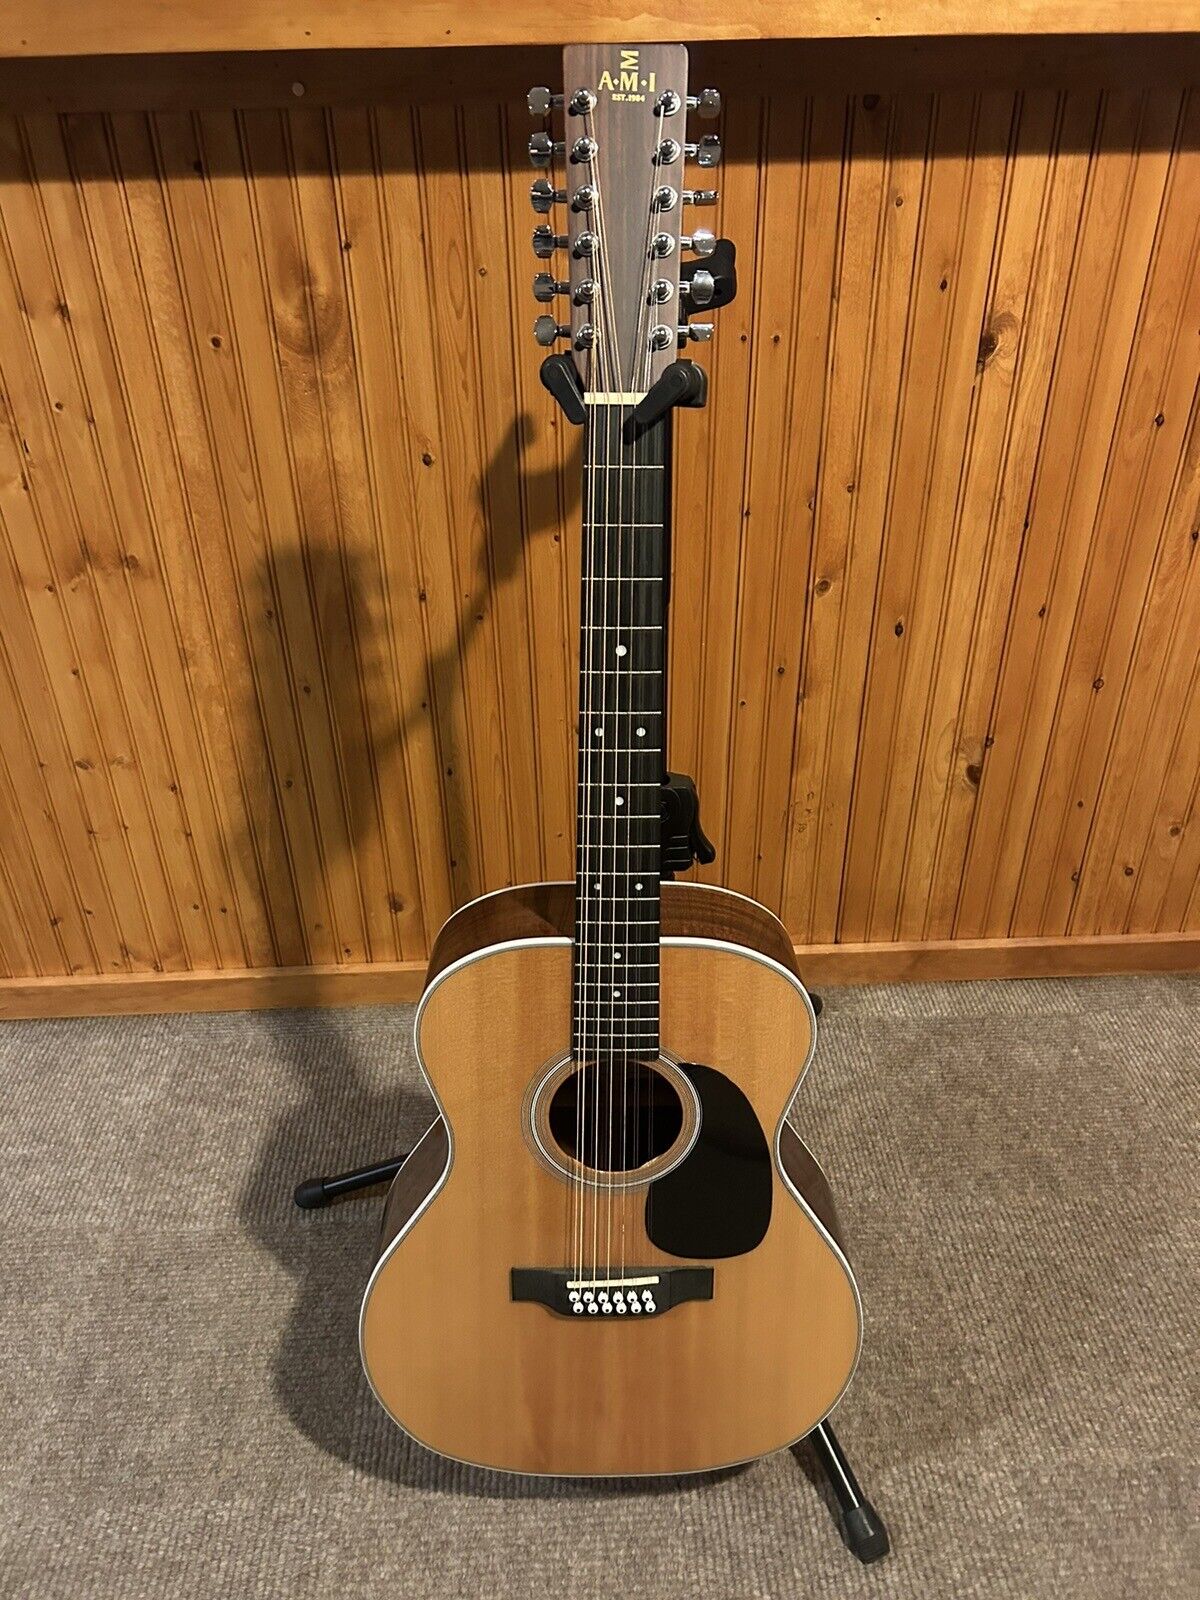 AMI JM12-STE 12 String Acoustic Guitar S/N:180605843 1